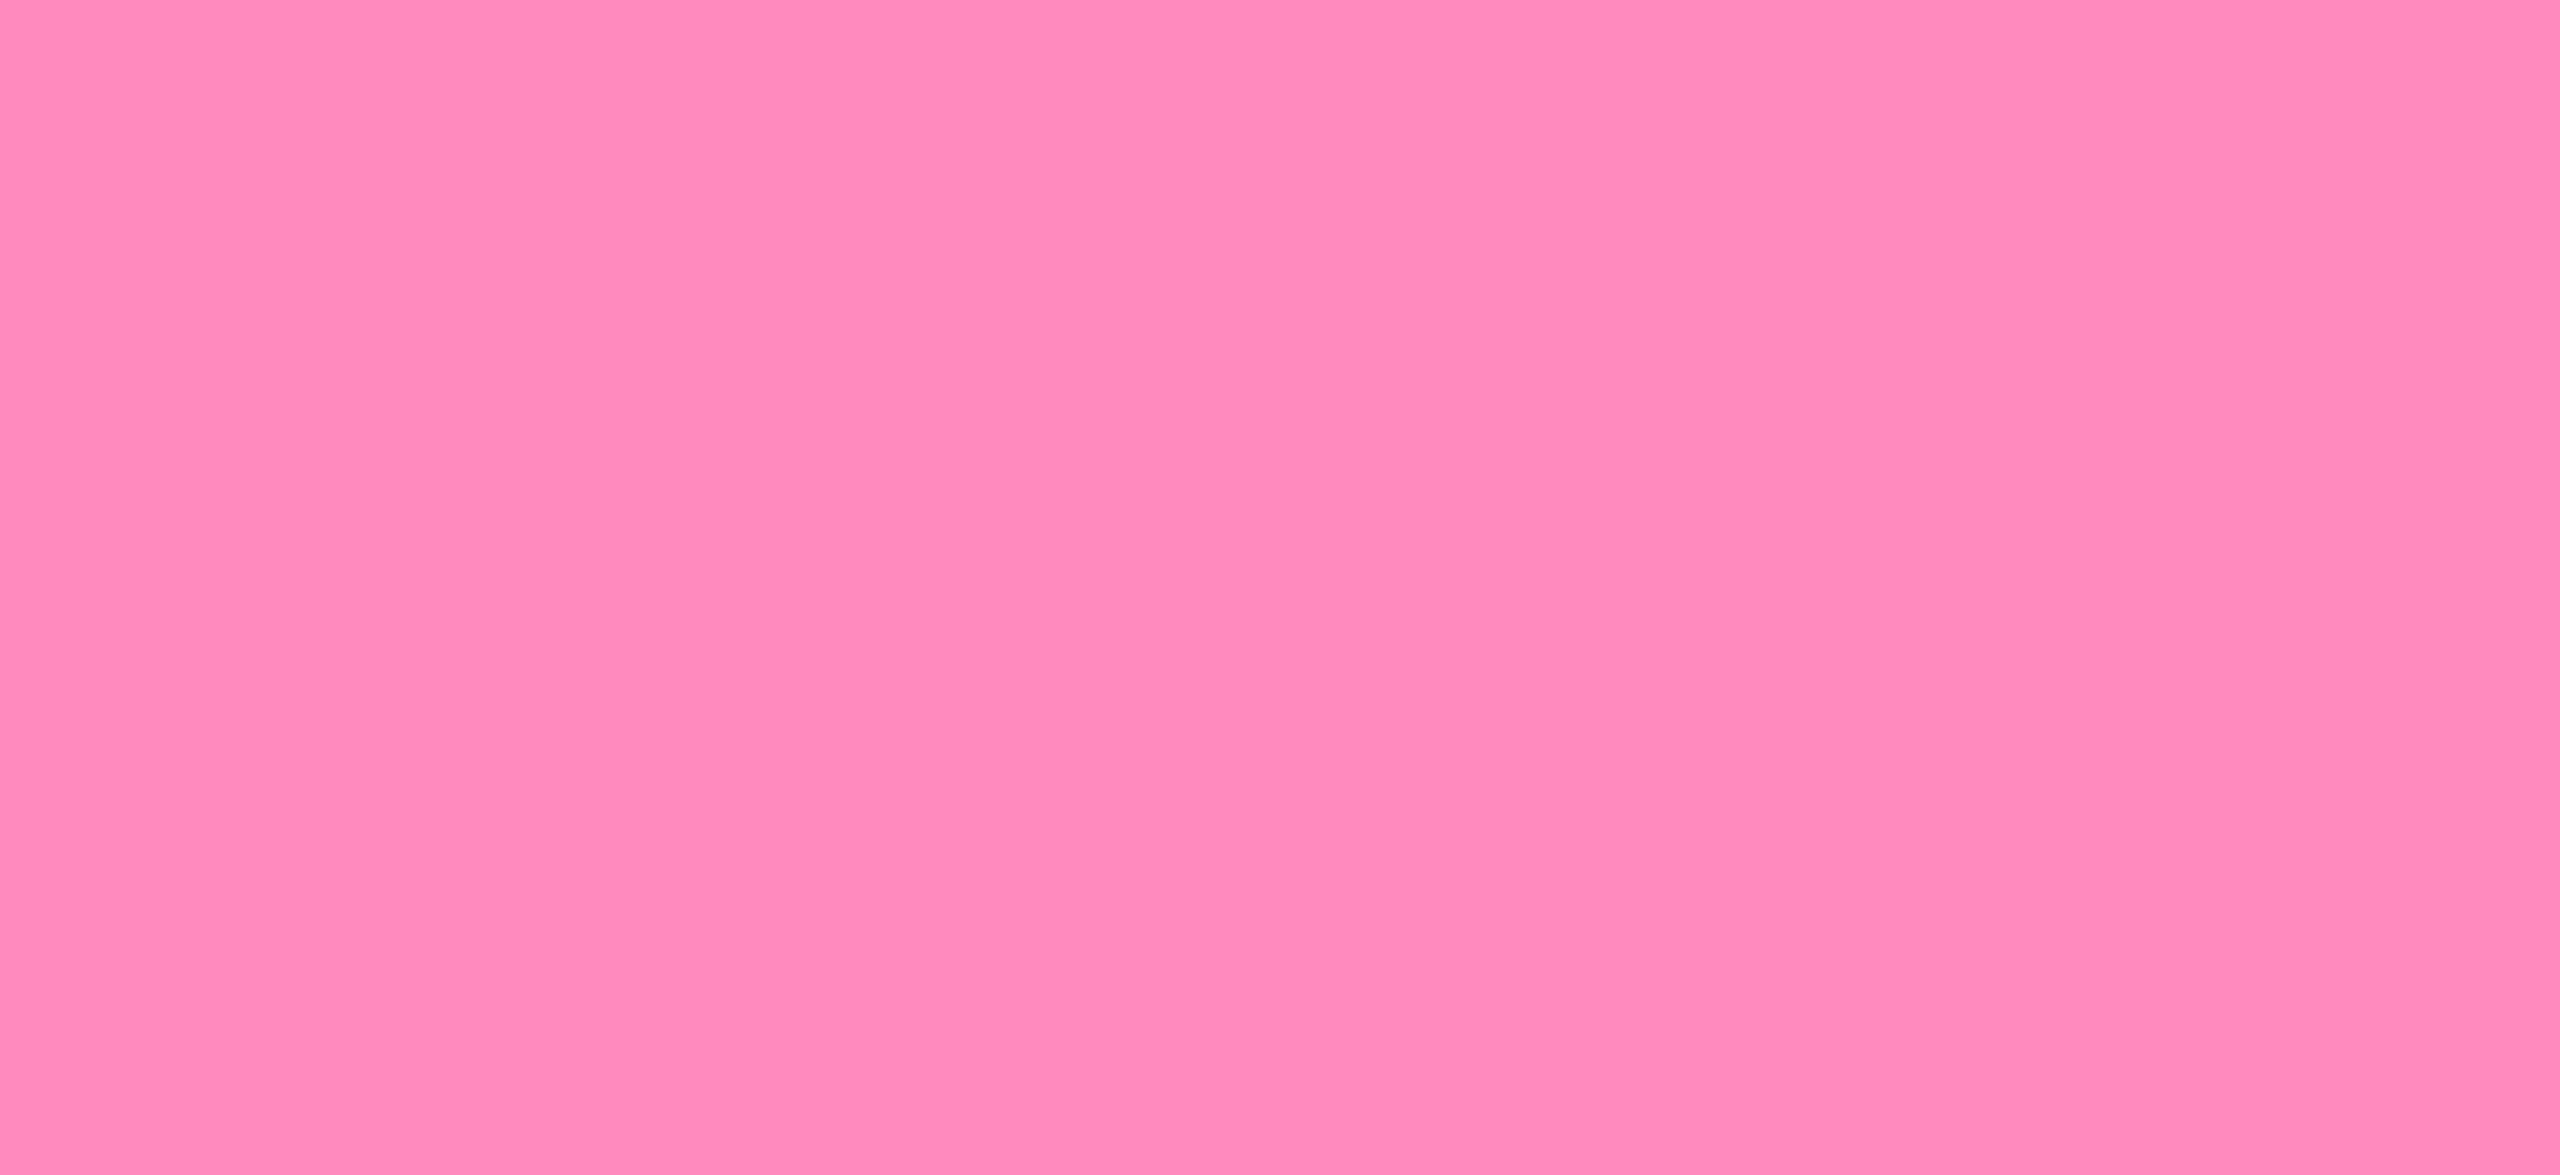 pink promo graphic